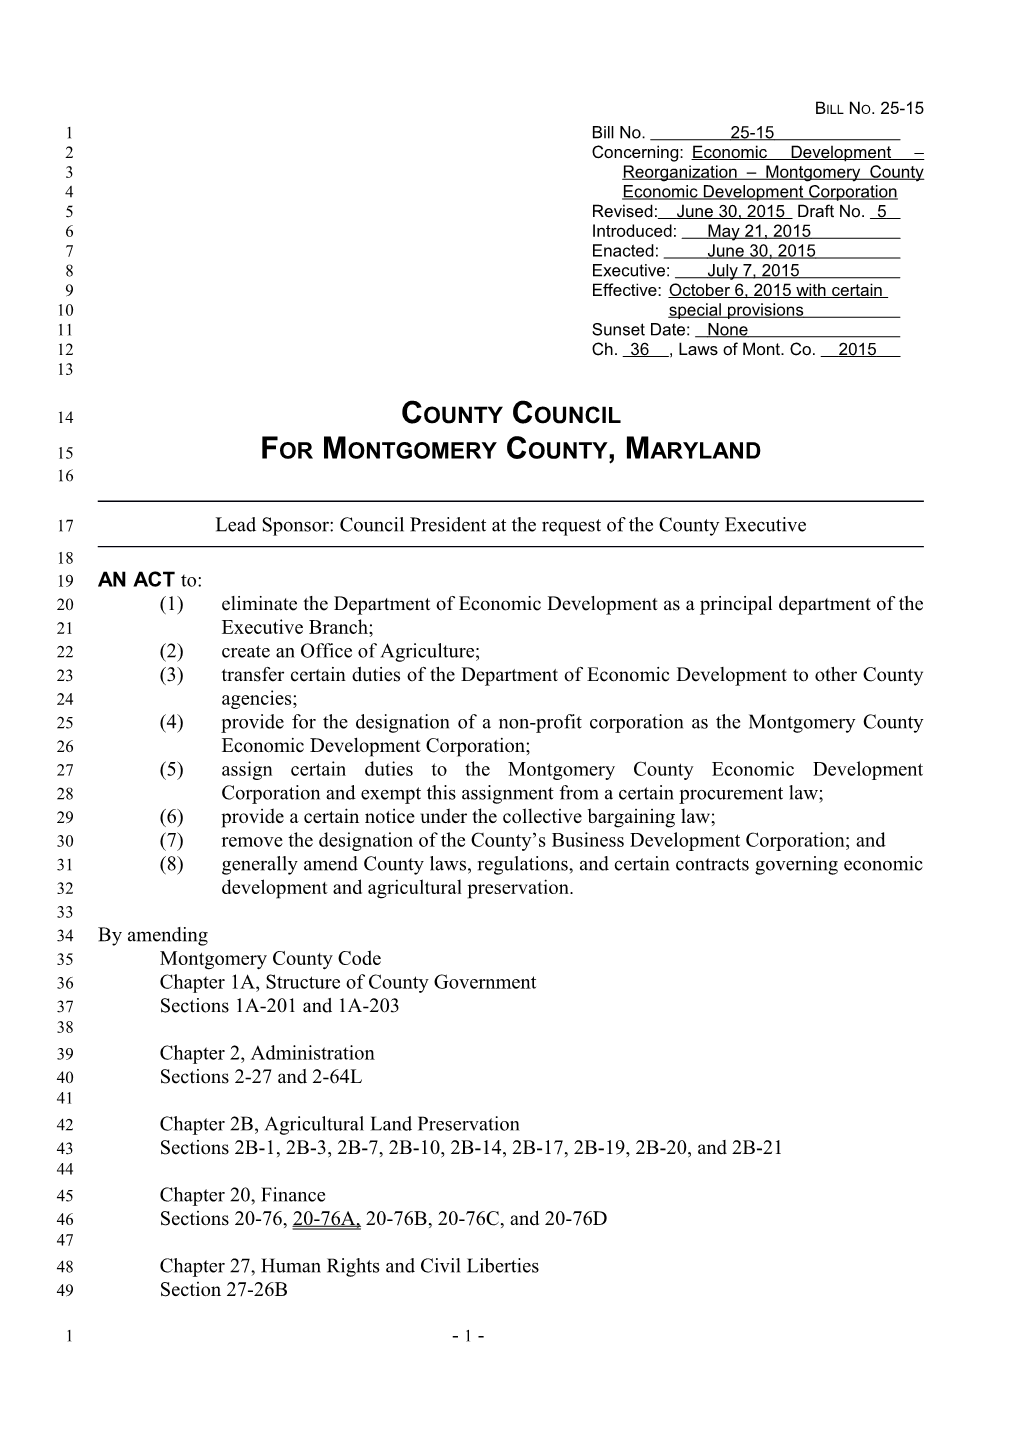 Concerning: Economic Development Reorganization Montgomery County Economic Development